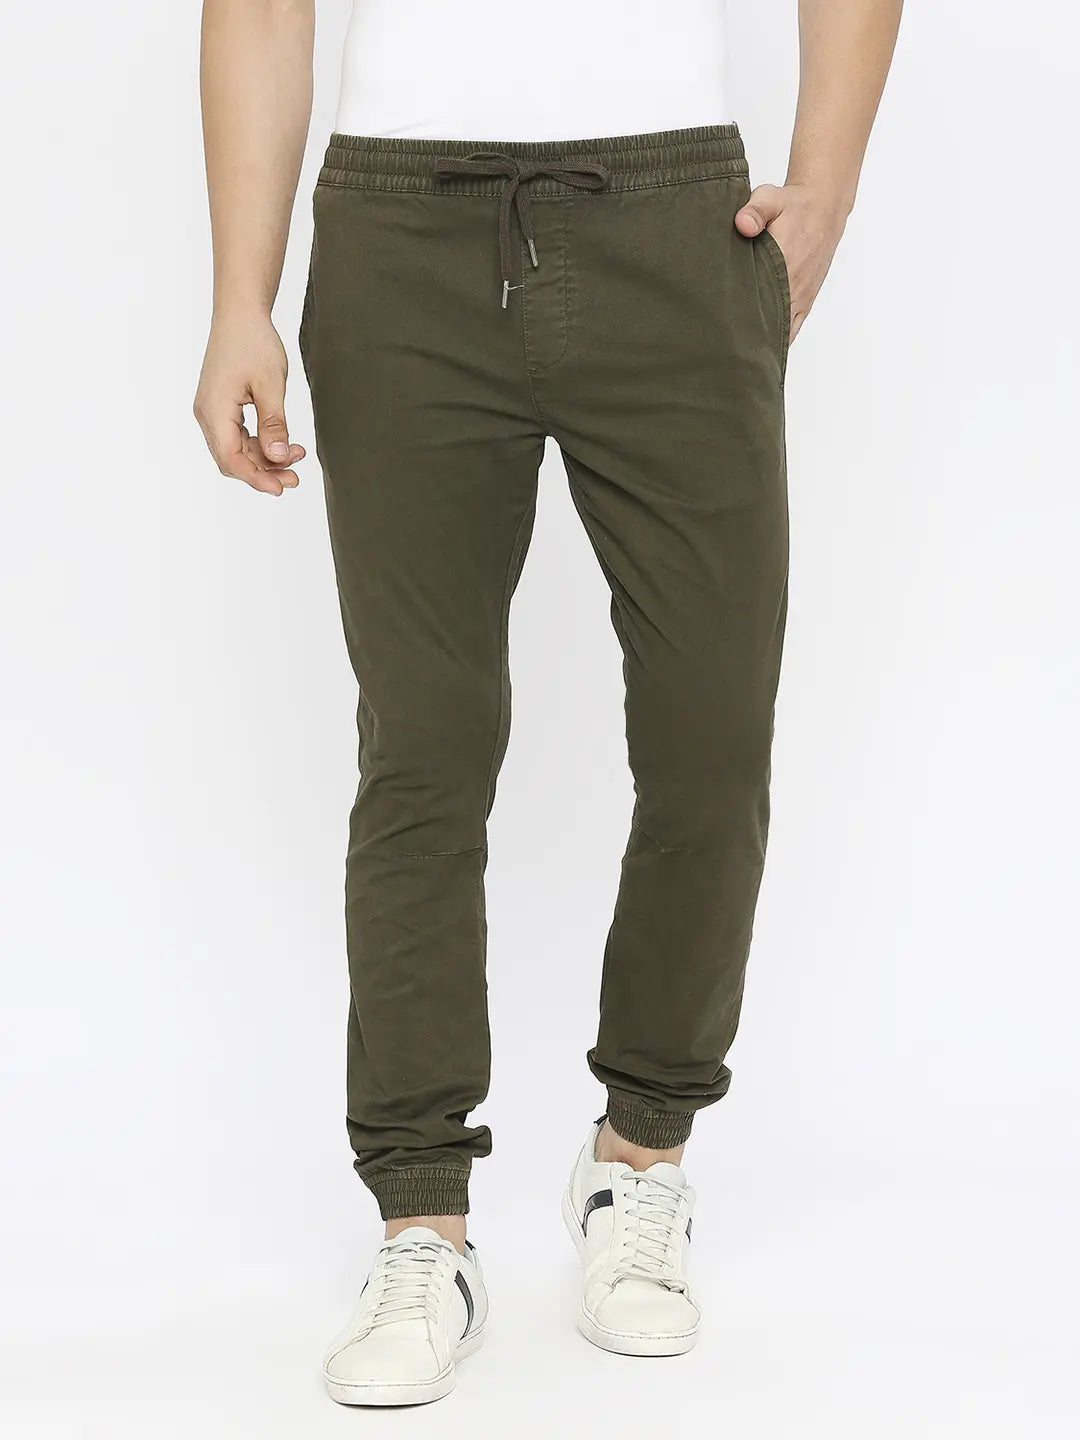 Buy Urban Trousers Online  Casual Trousers for Men  Kultprit  KULTPRIT